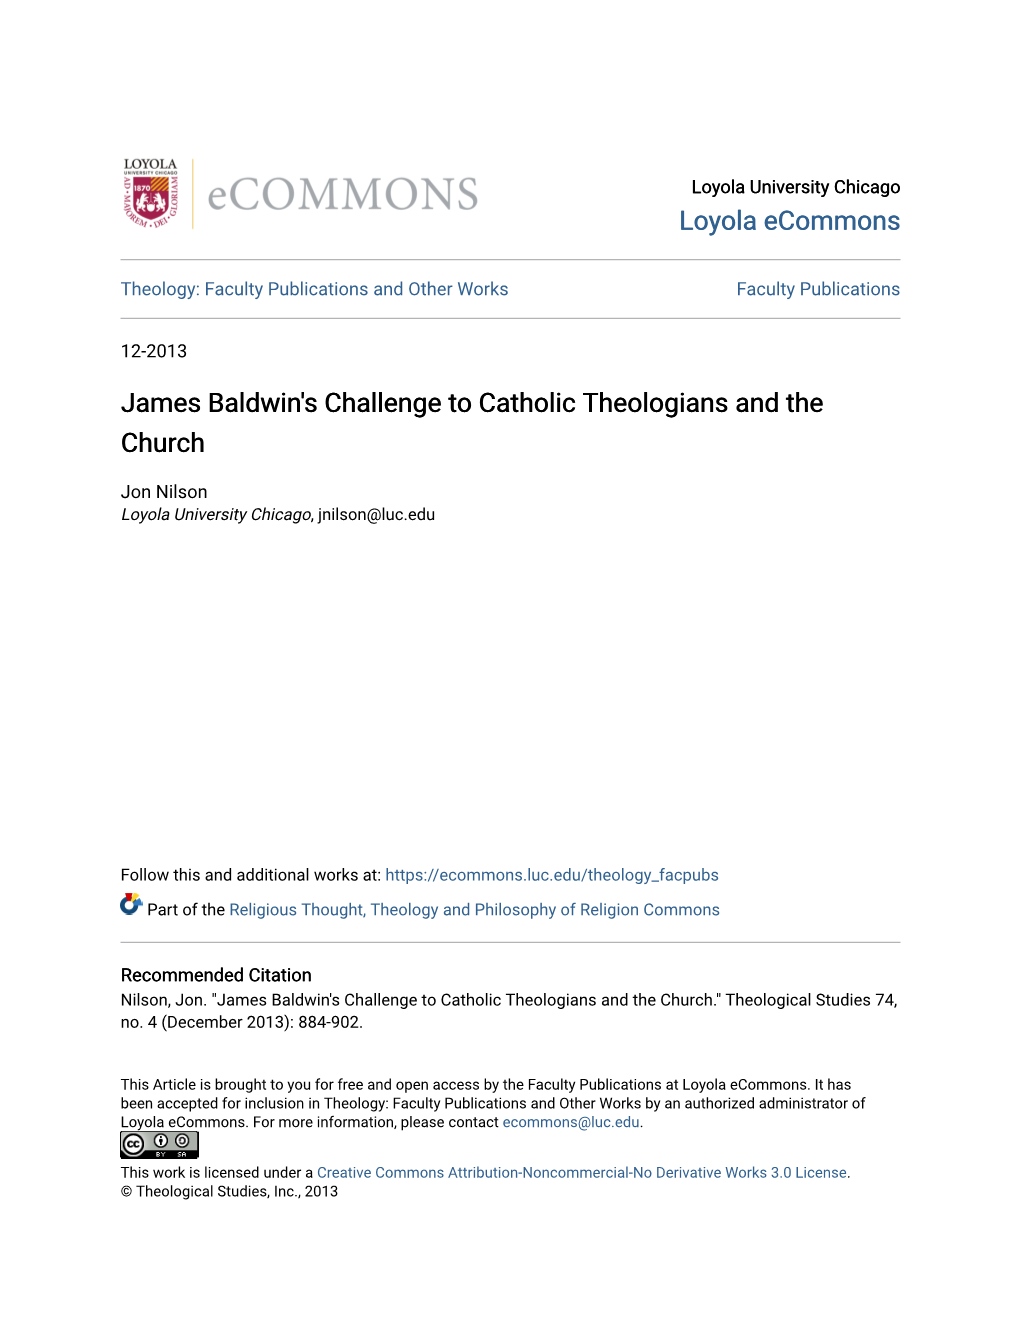 James Baldwin's Challenge to Catholic Theologians and the Church